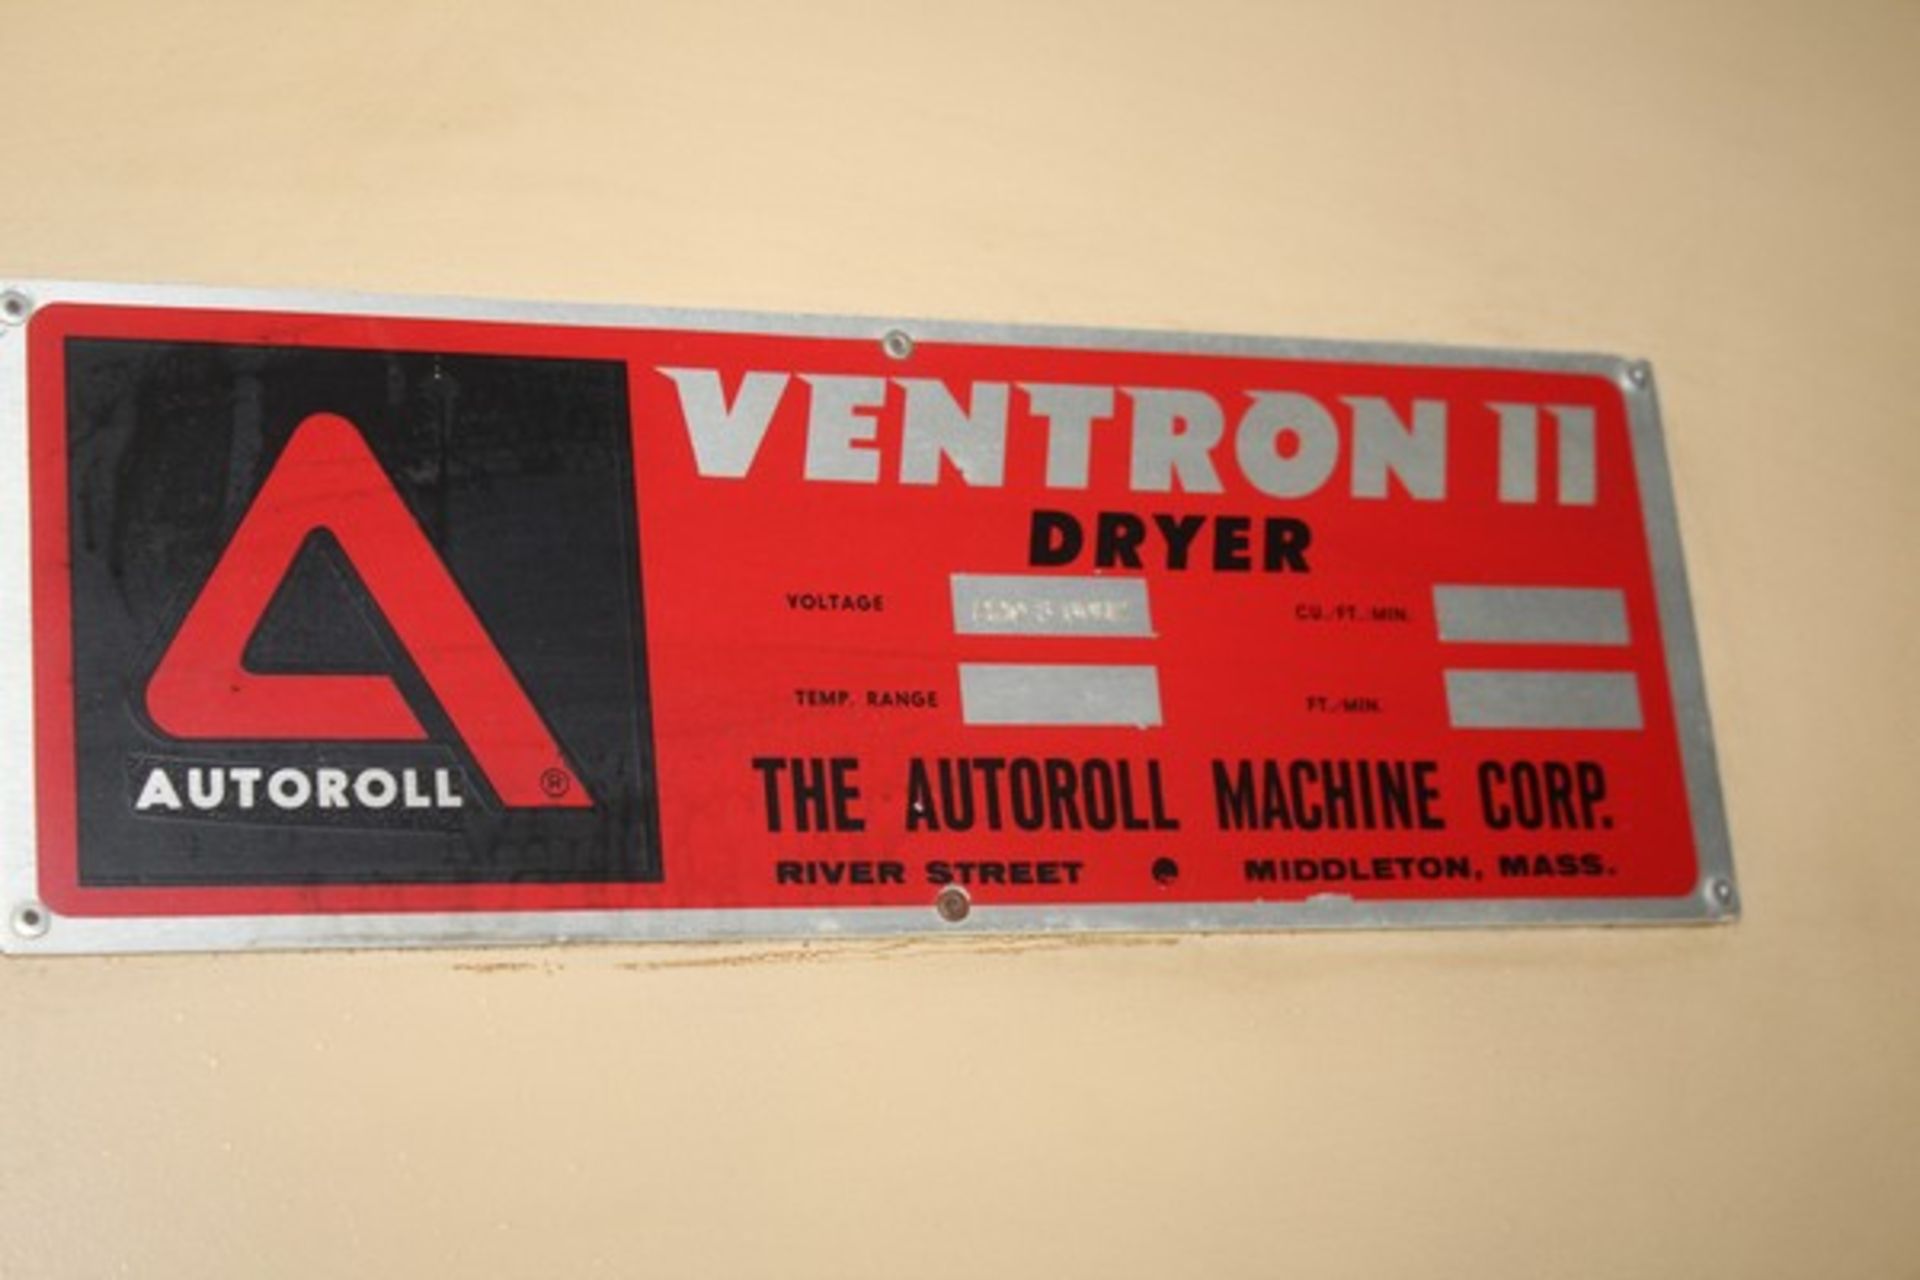 AUTOROLL VENTRON II HEAT TUNNEL, 440 VOLTS - Image 3 of 4